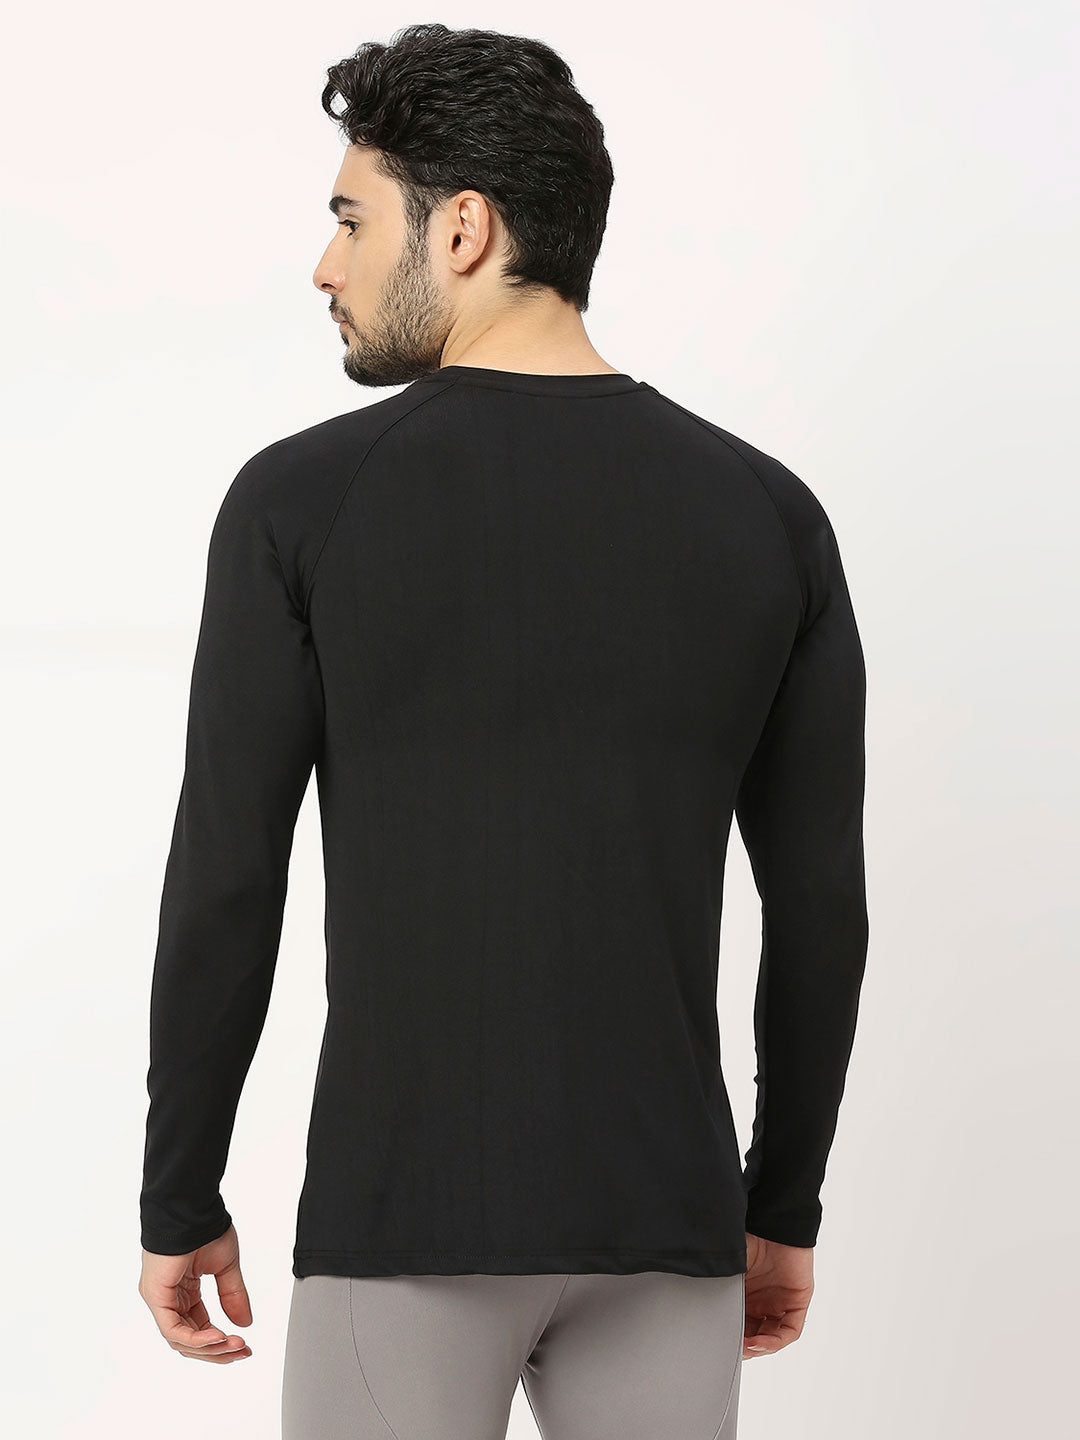 Men's Long Sleeve Sports T-Shirt - Black - 1